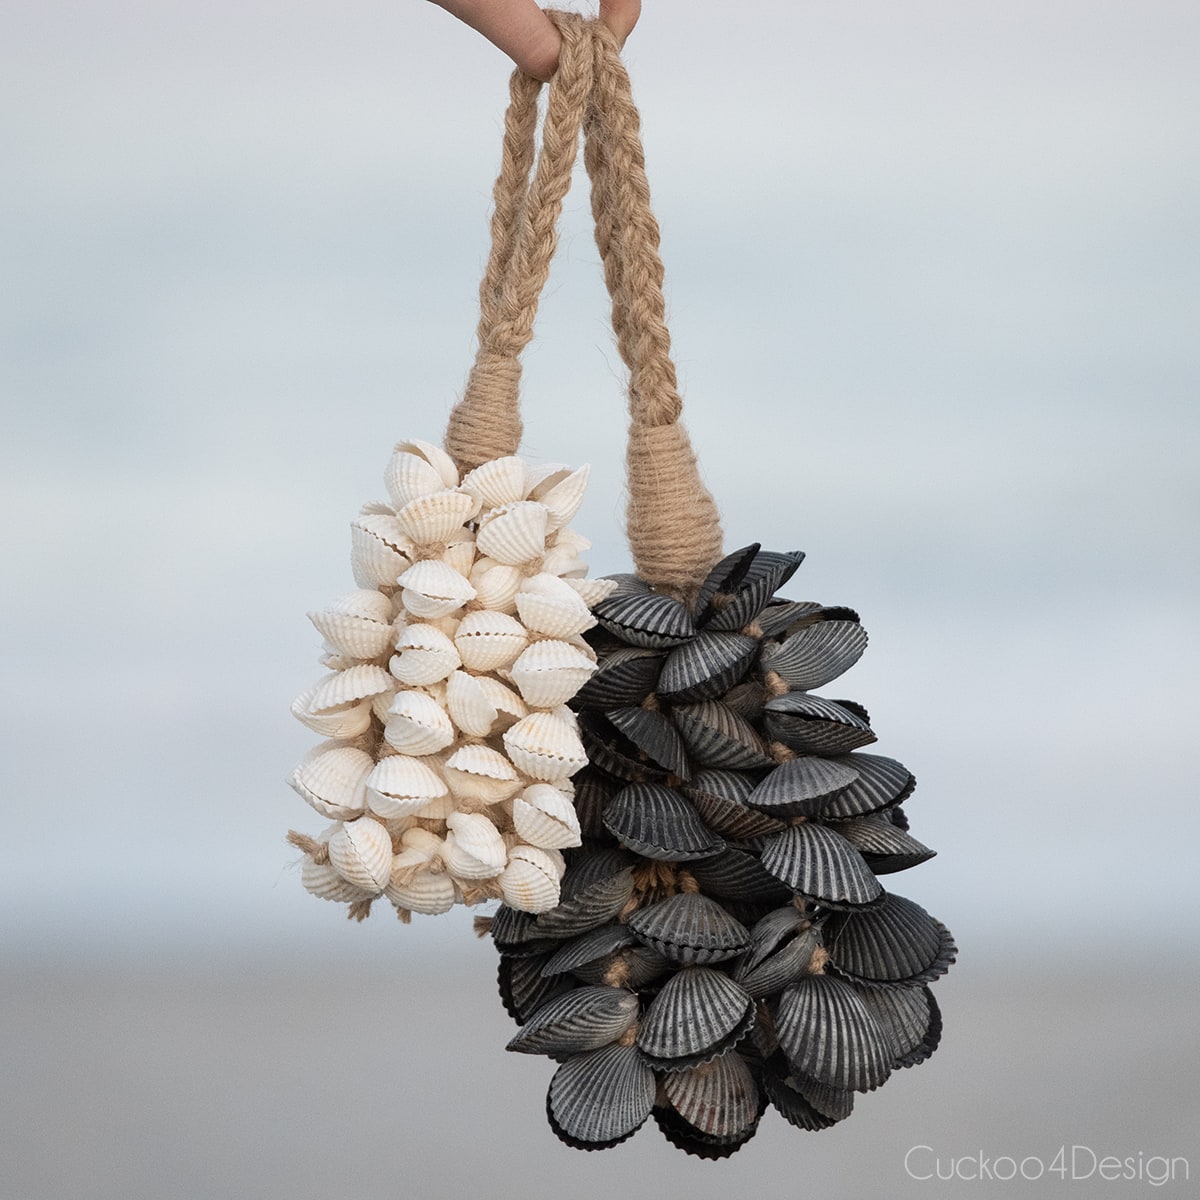 How to make seashell tassels as boho beach decor